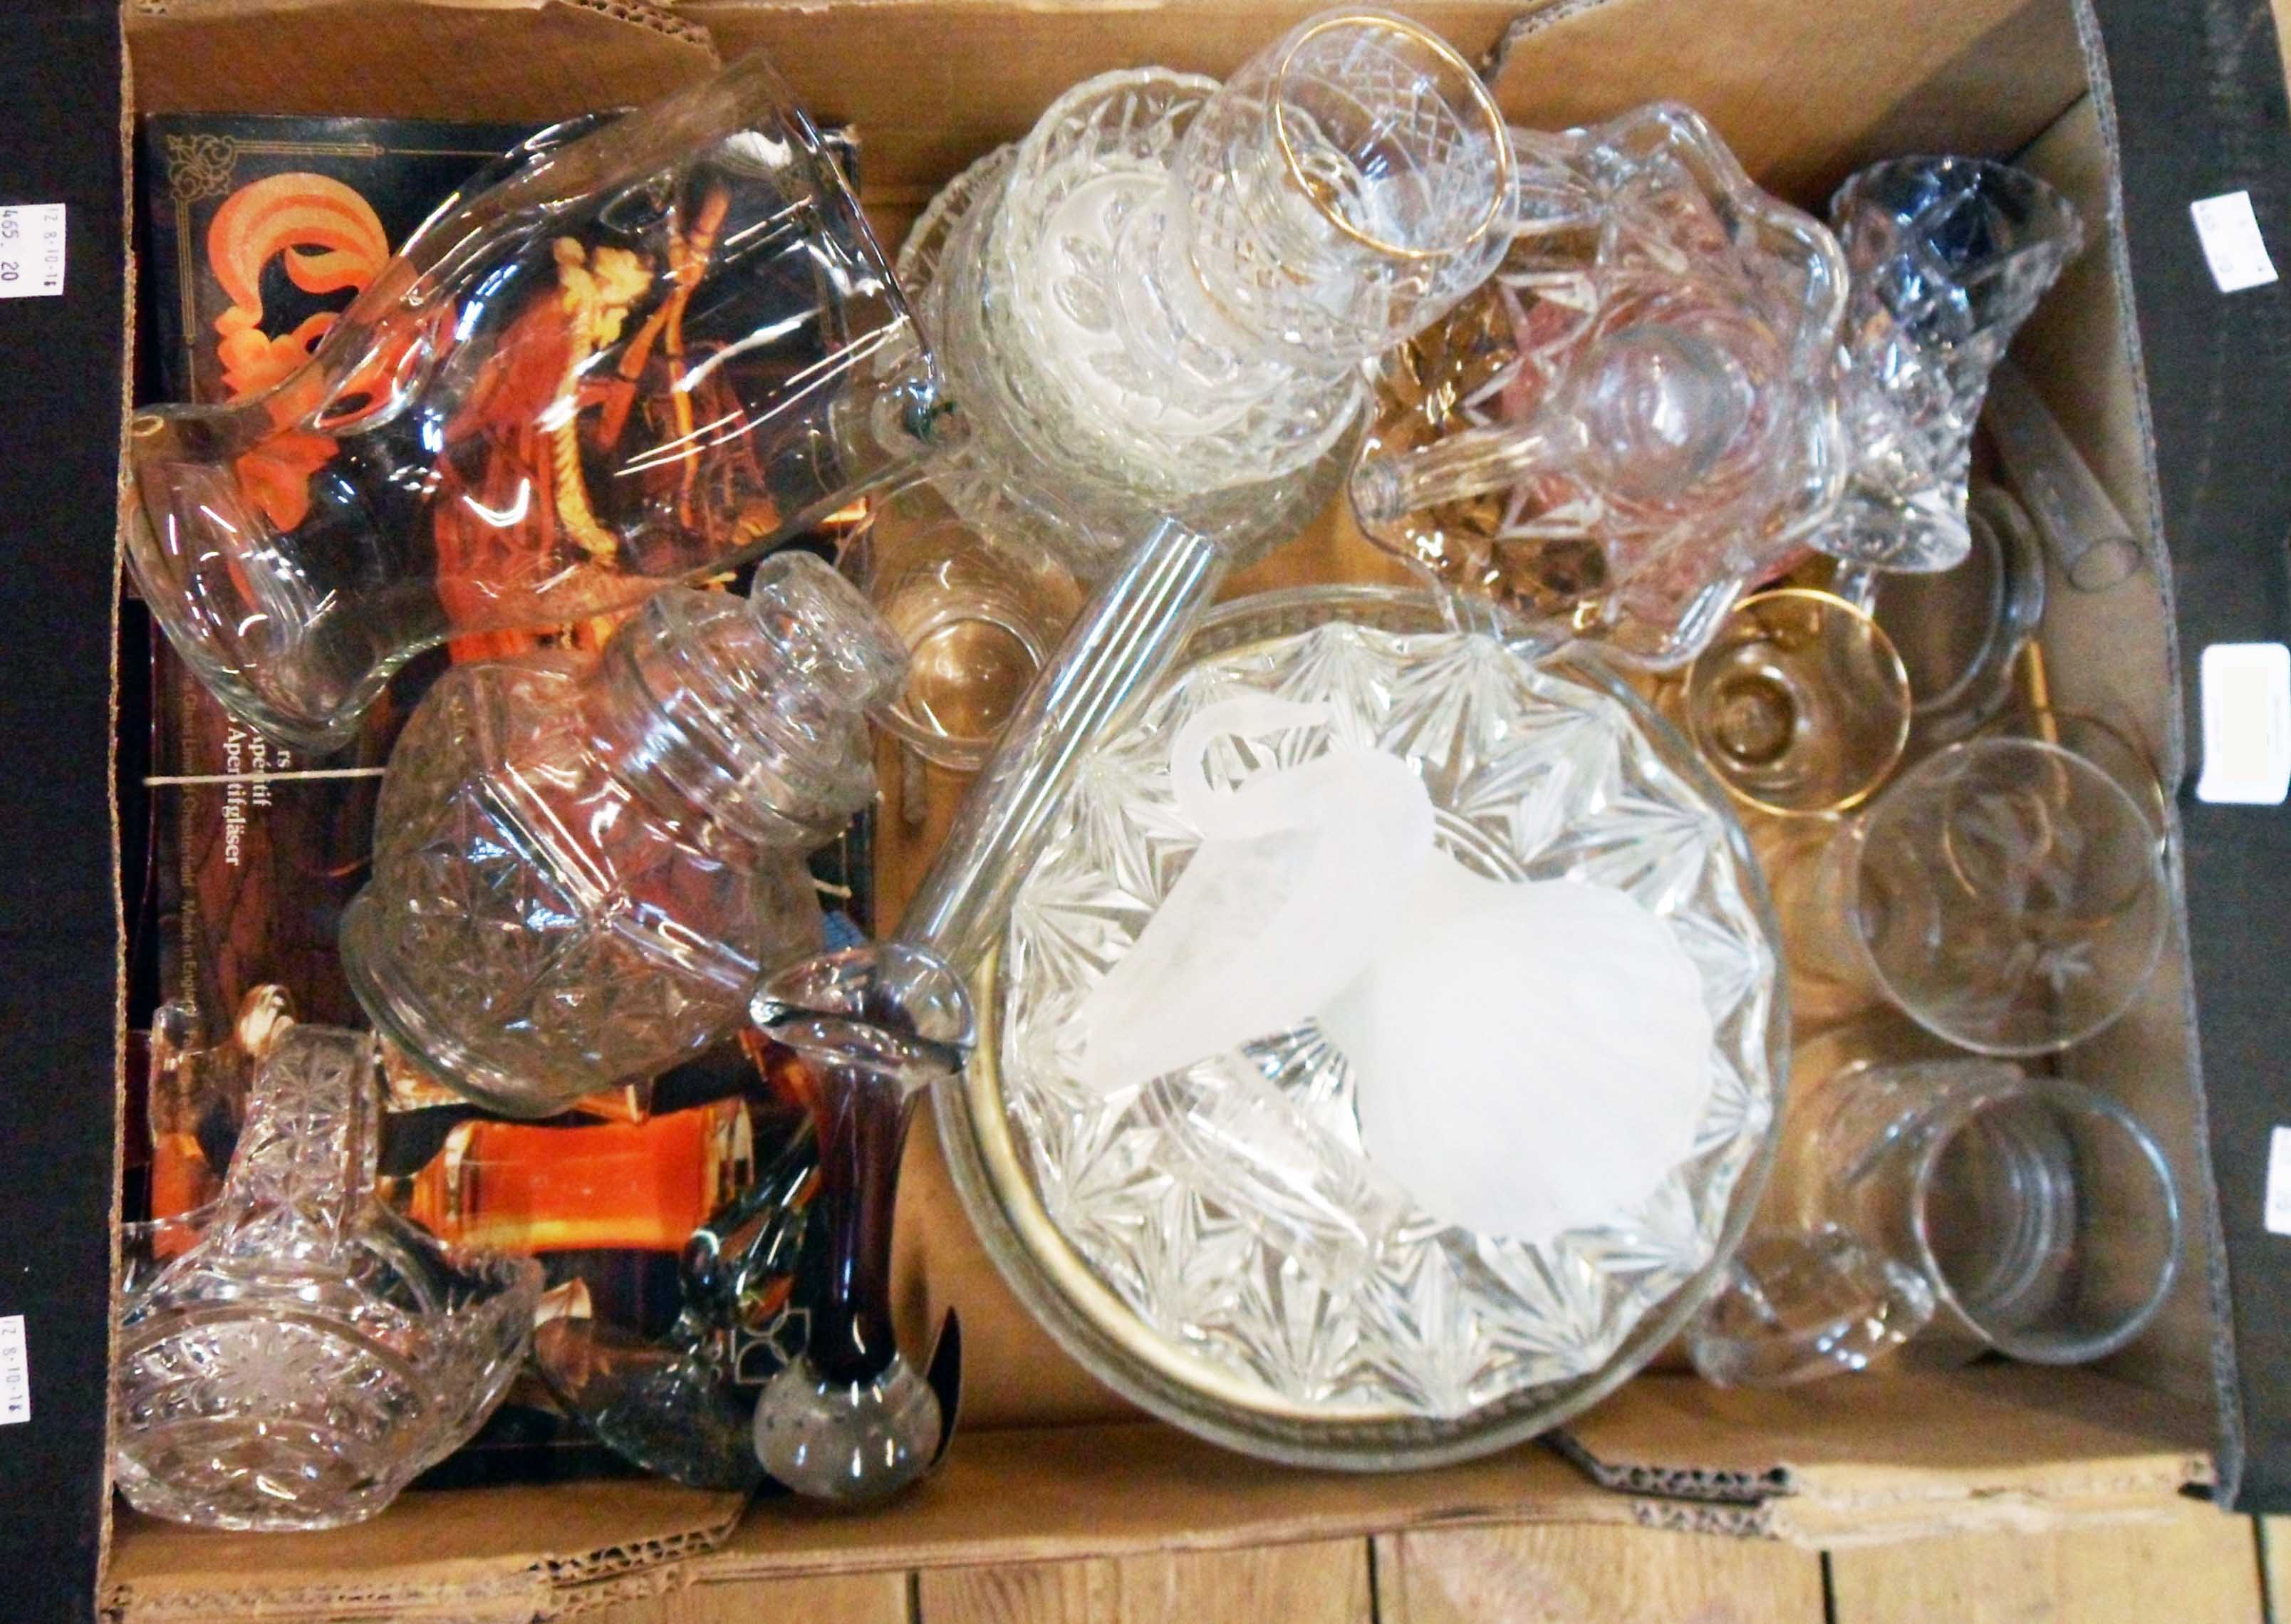 A quantity of glassware including bowls, bud vases, glasses, etc.